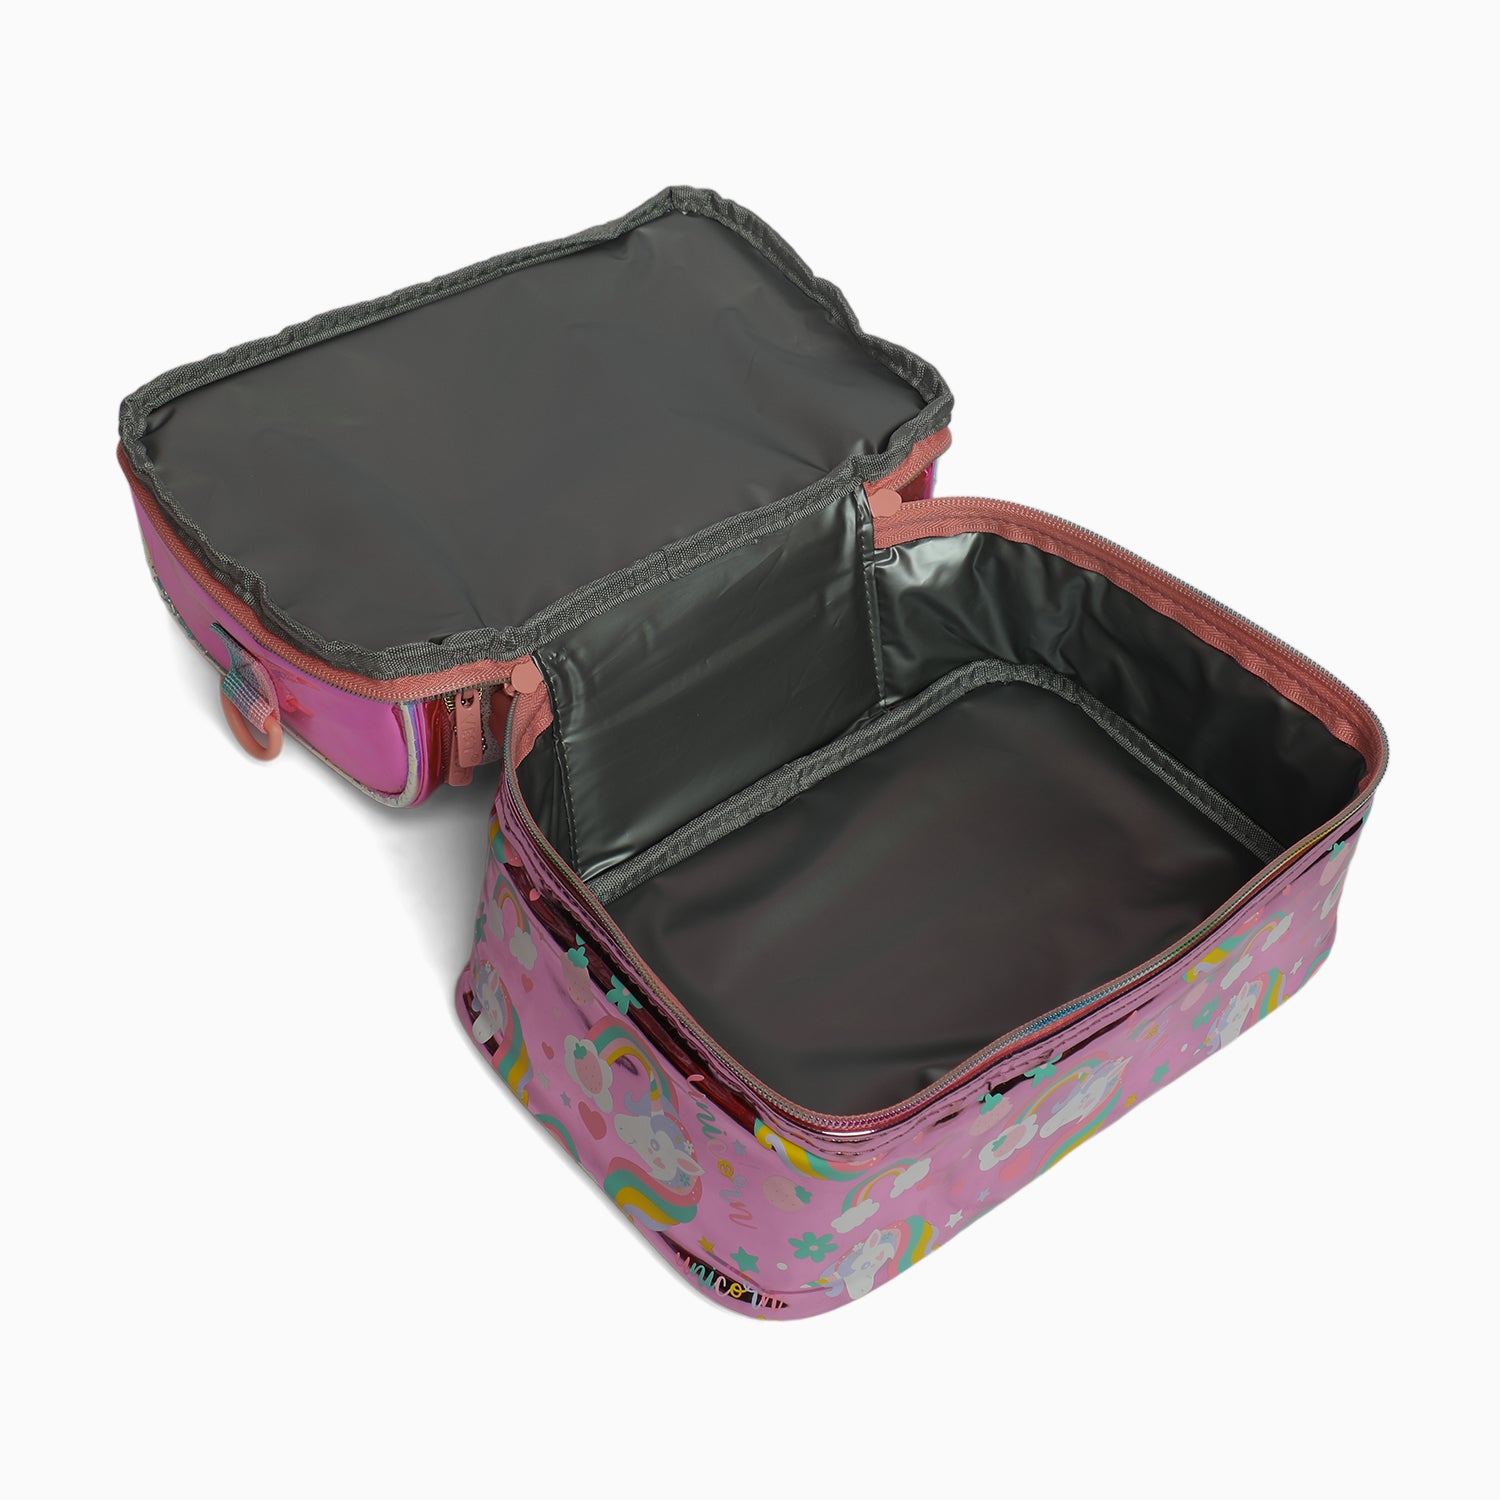 Premium Quality unicorn Multipurpose Double Decker Insulated tiffin-Bag For Kids